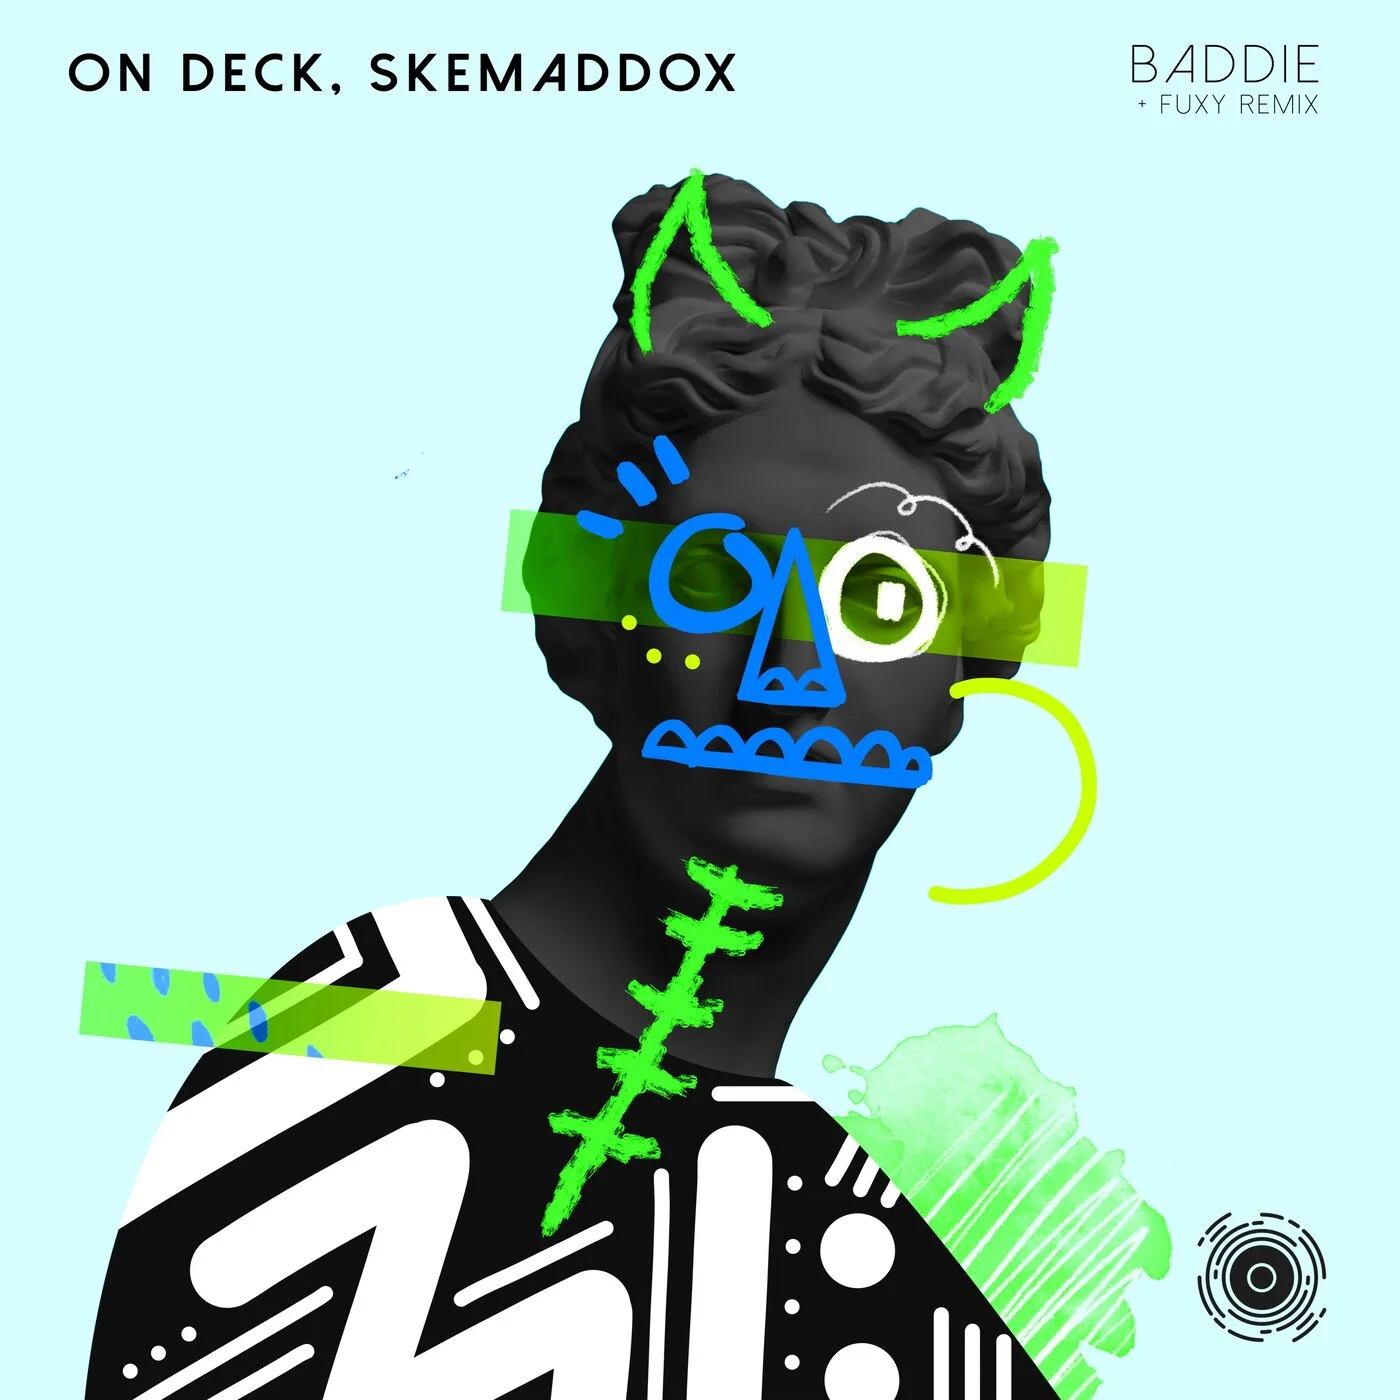 On Deck Skemaddox - Baddie (Fuxy Remix)